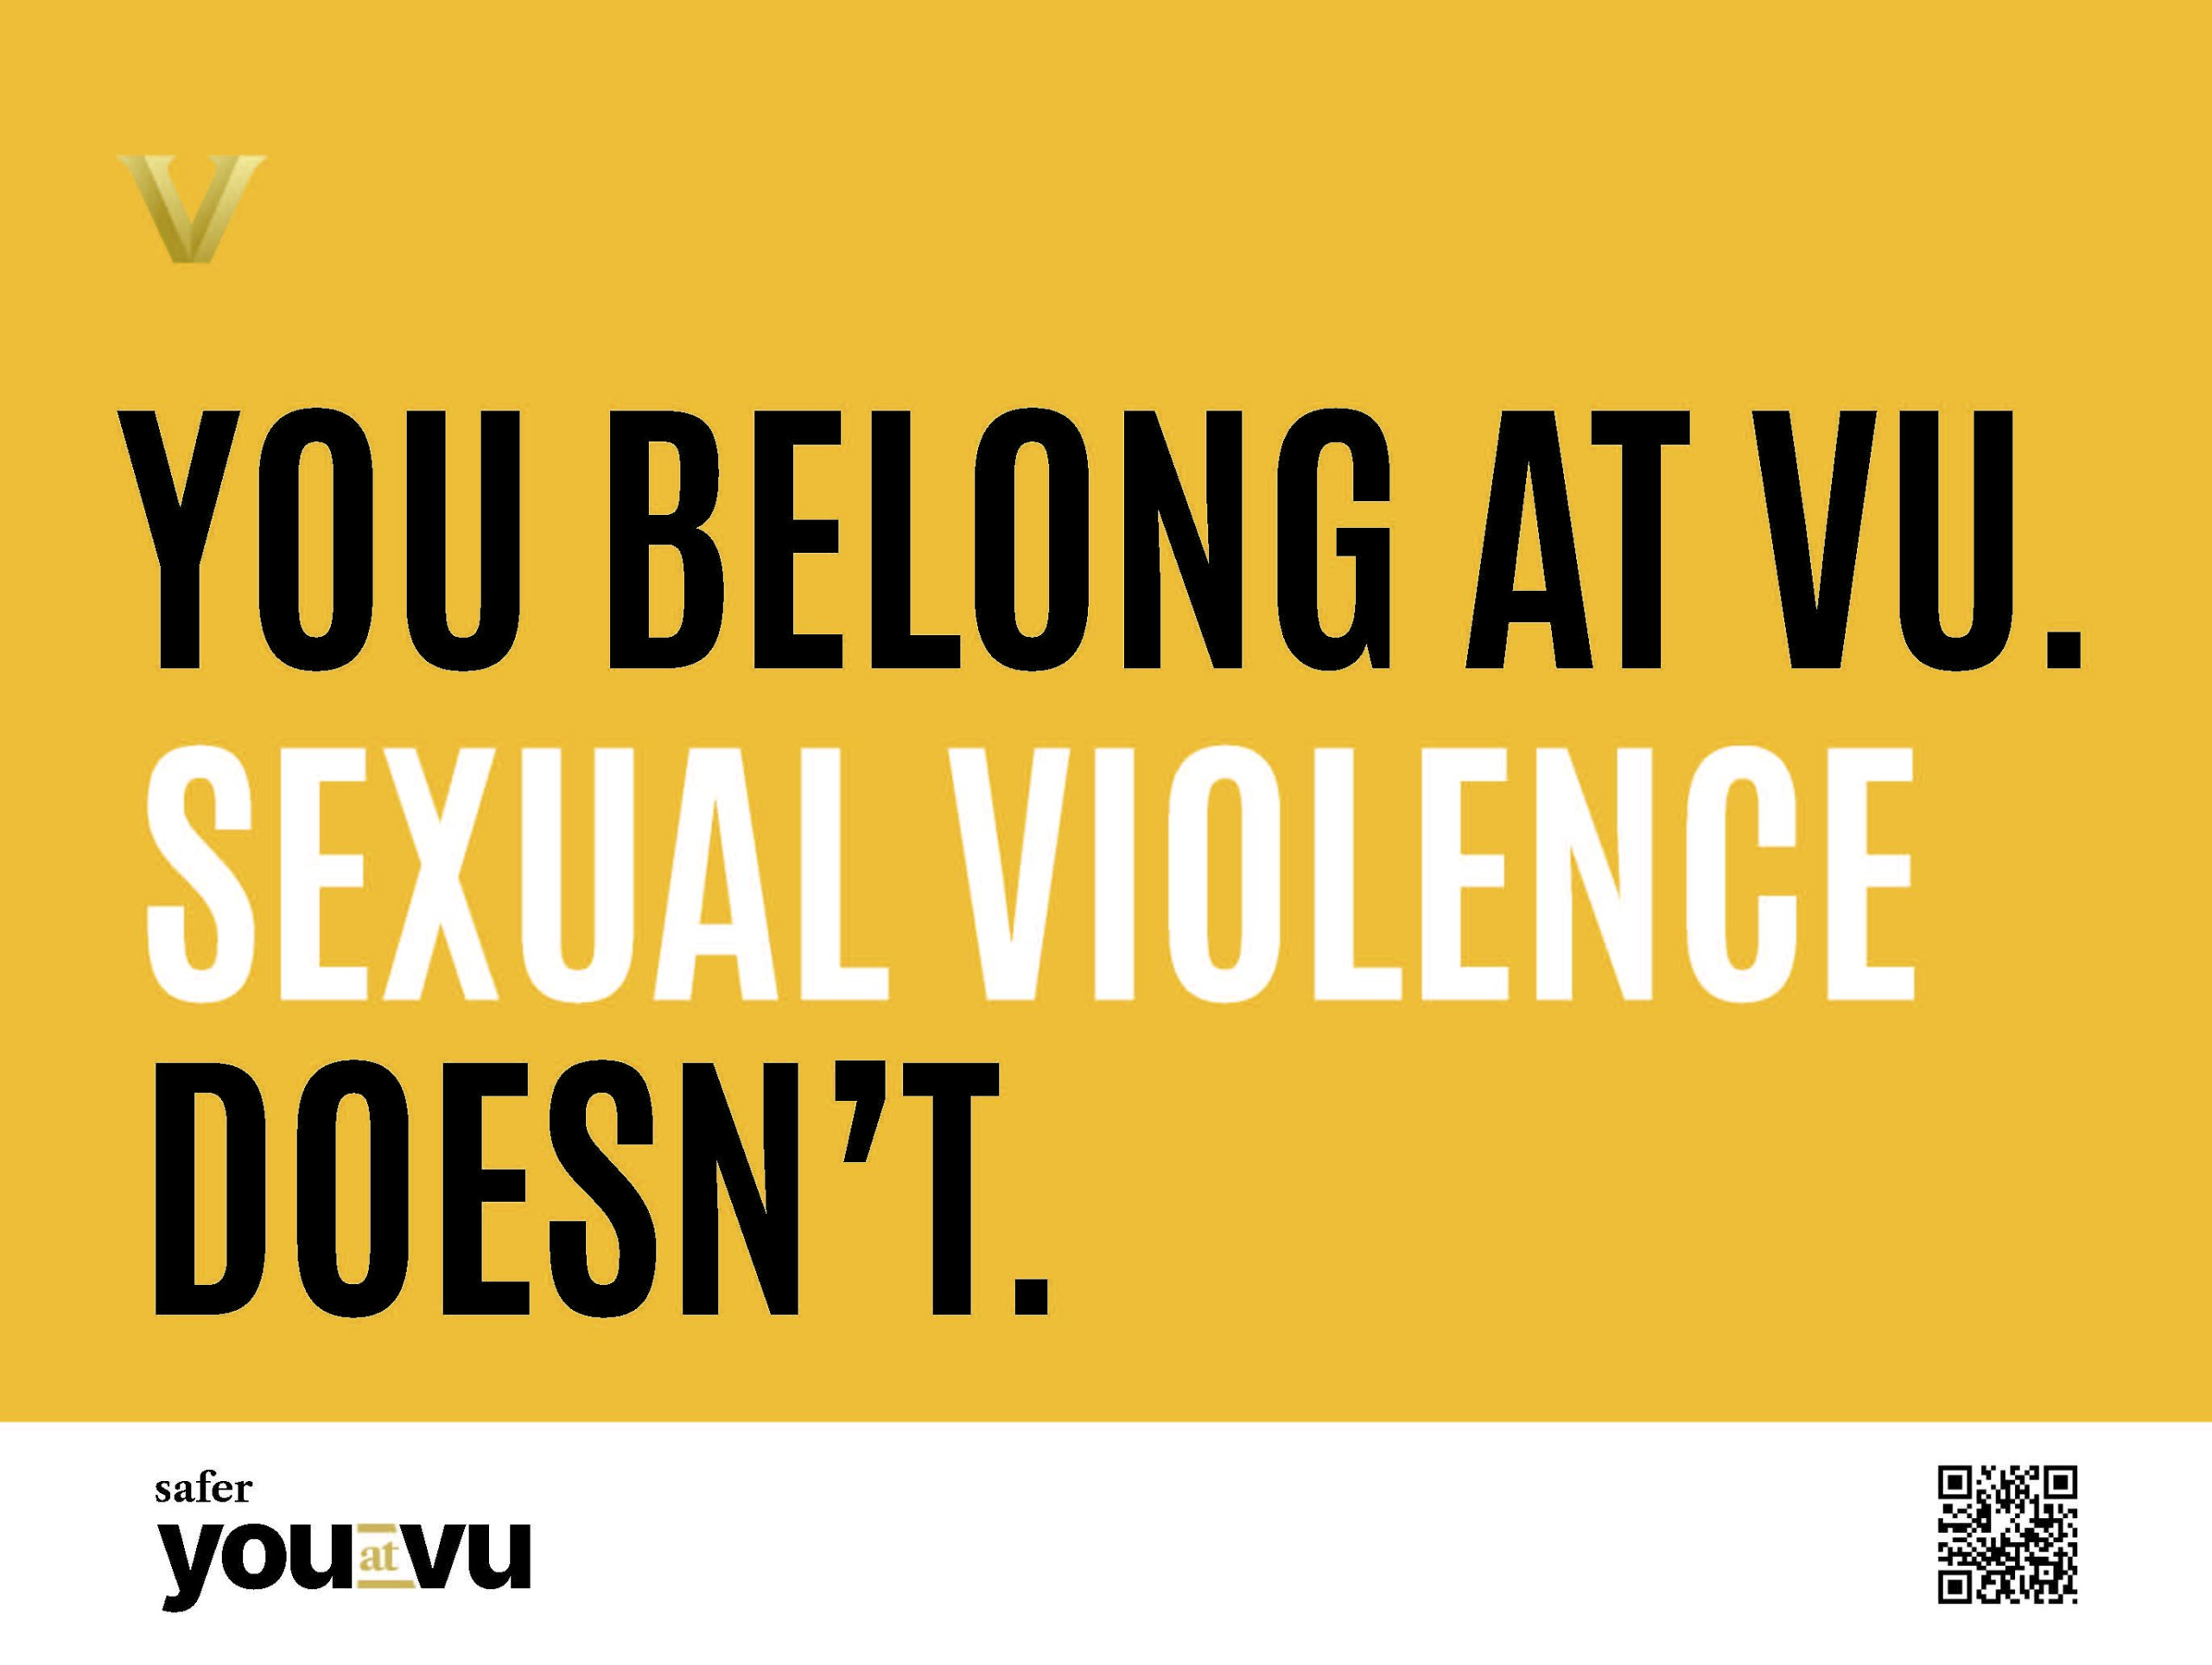 You belong at VU. Sexual violence doesn't.